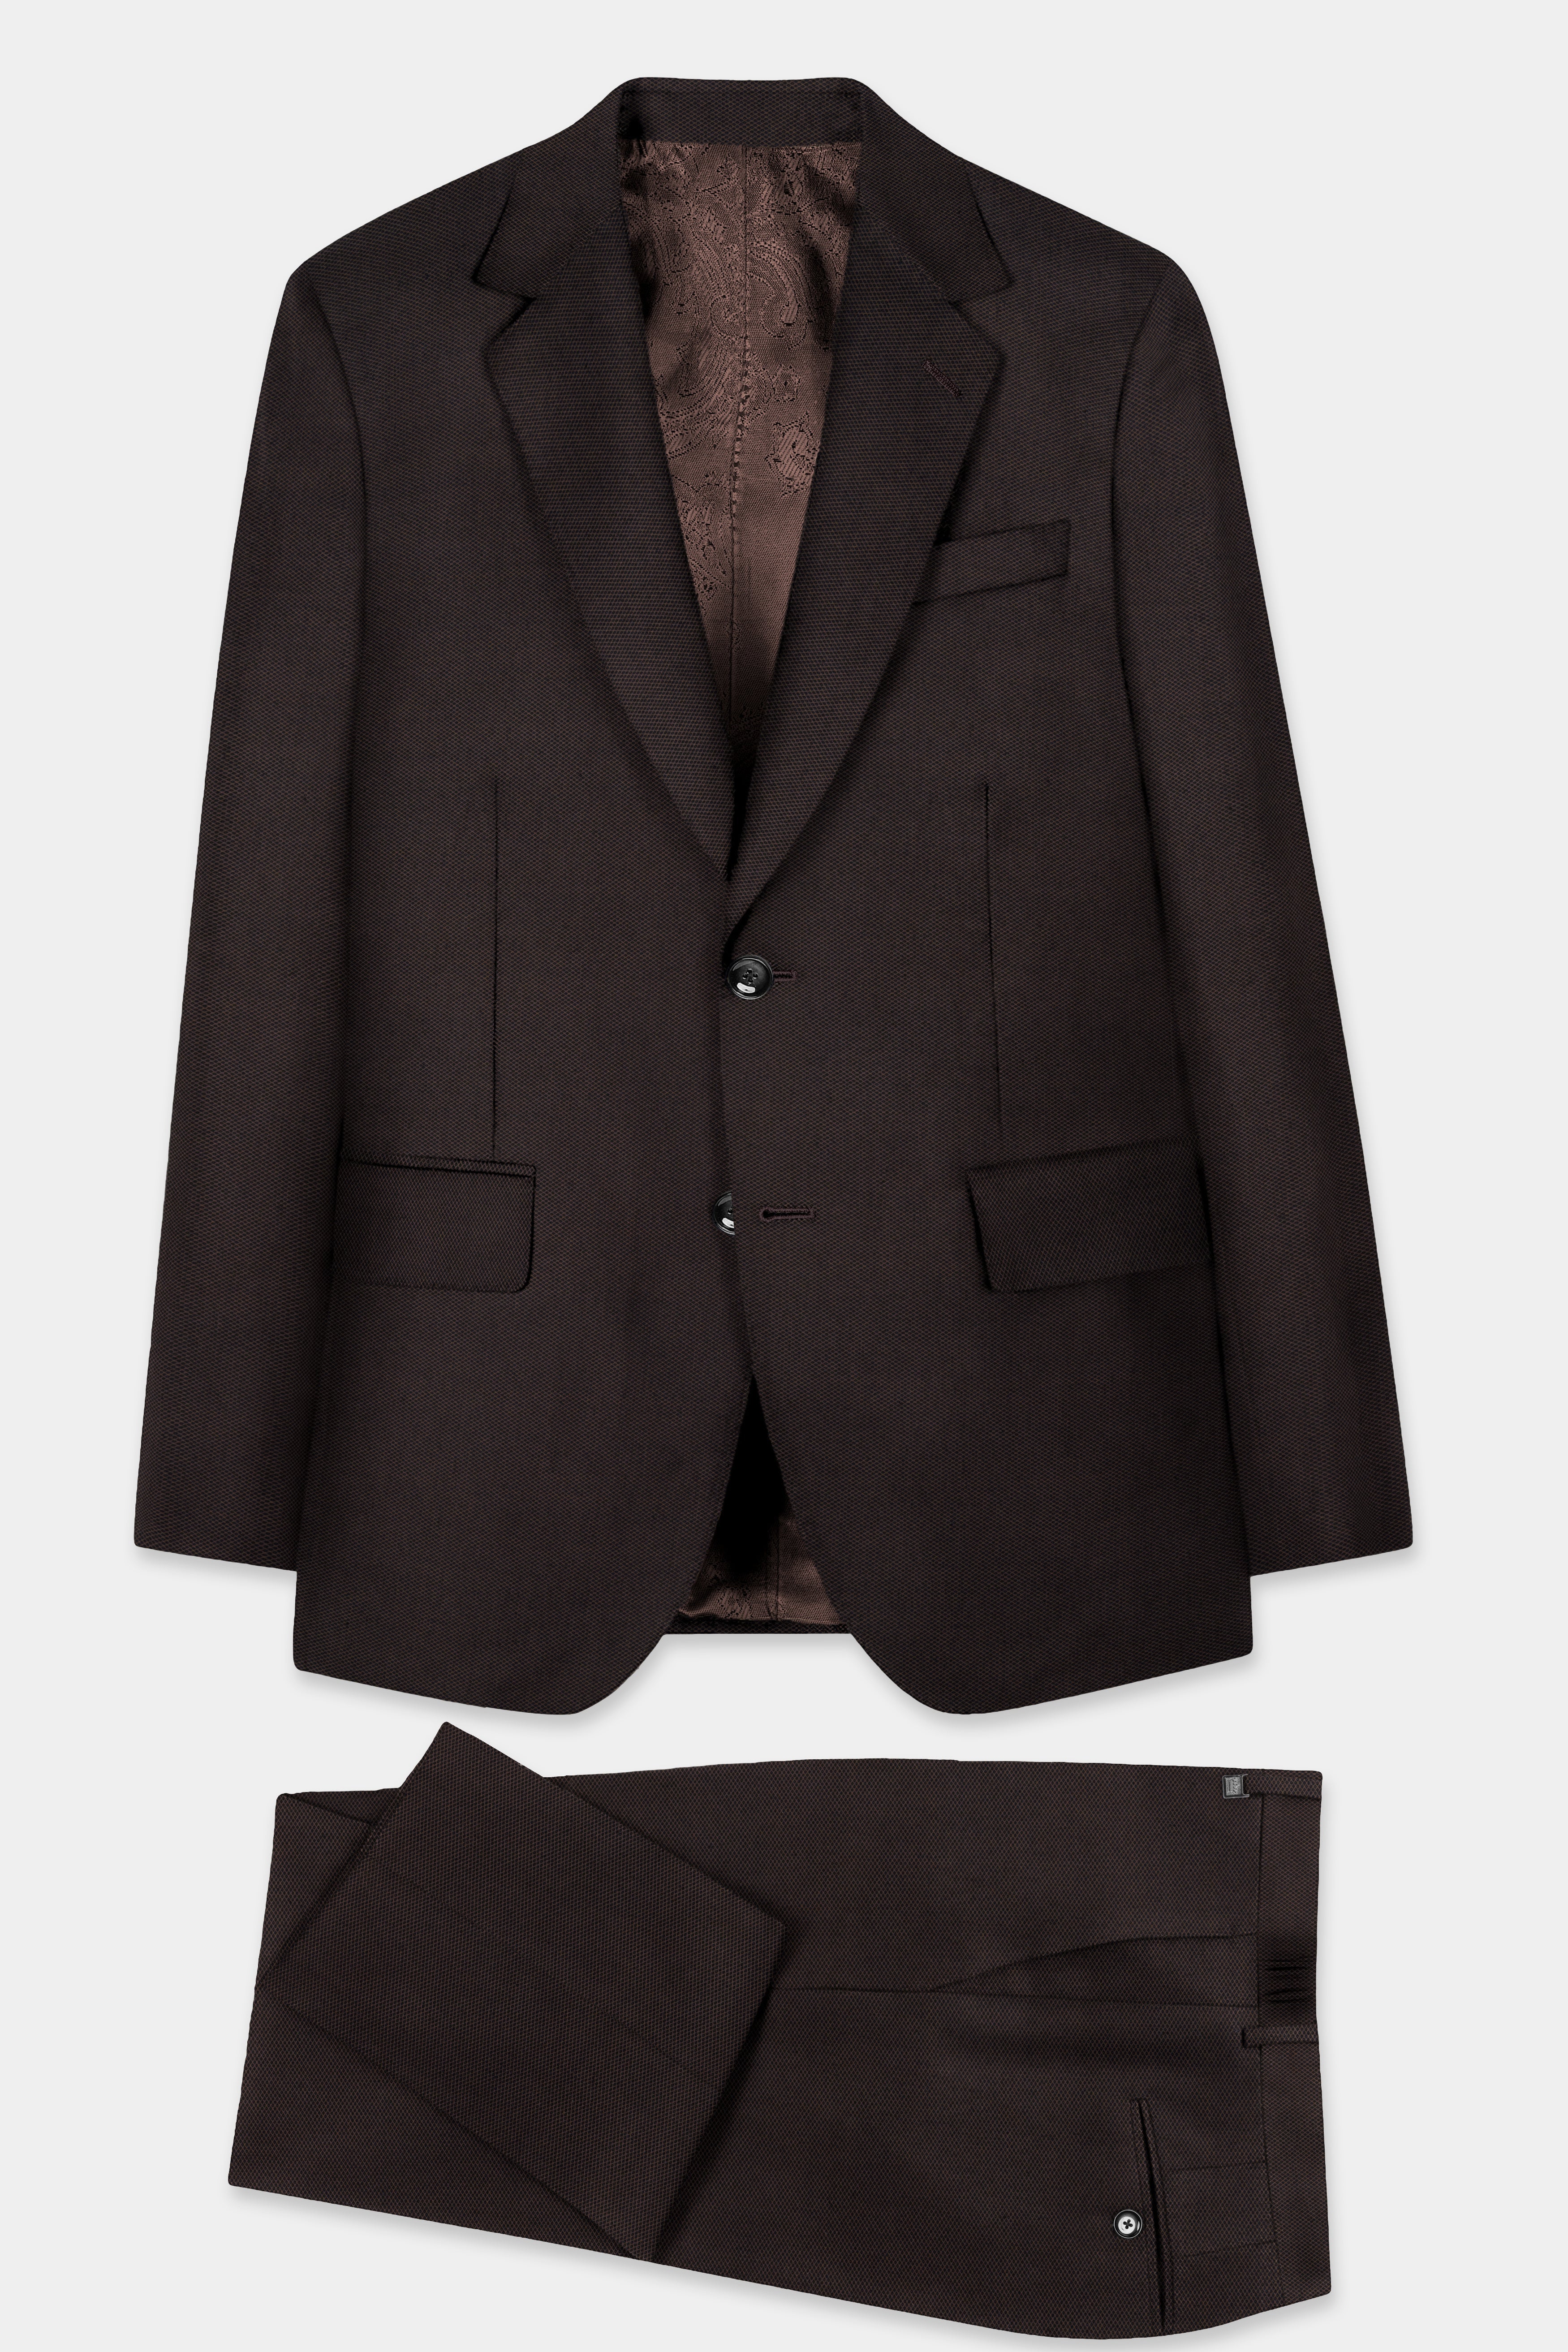 Zeus Brown Dobby Textured Wool Blend Suit